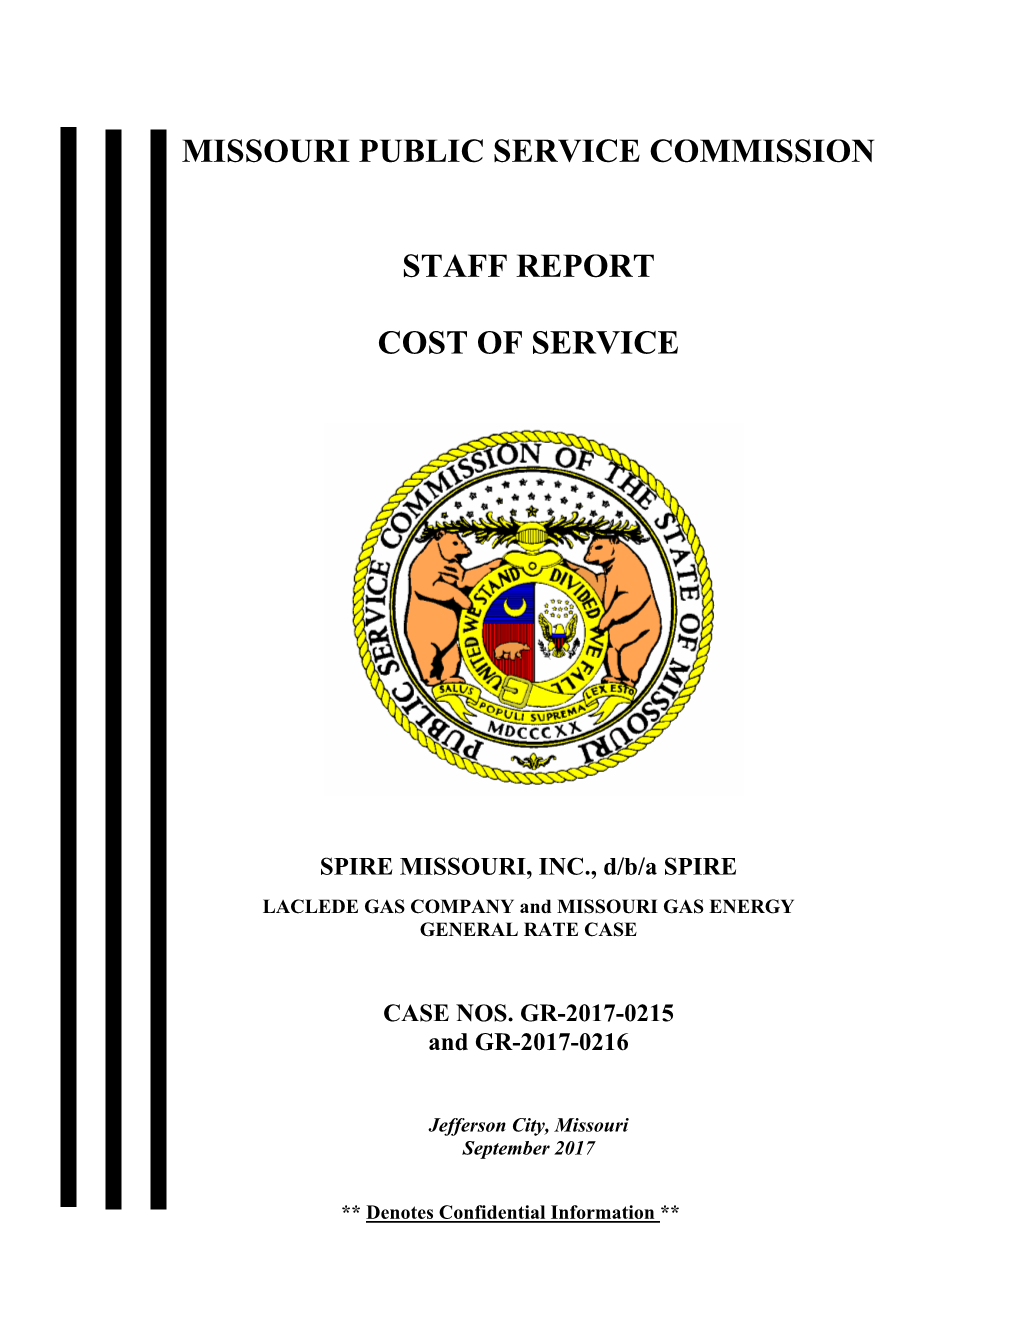 Missouri Public Service Commission Staff Report